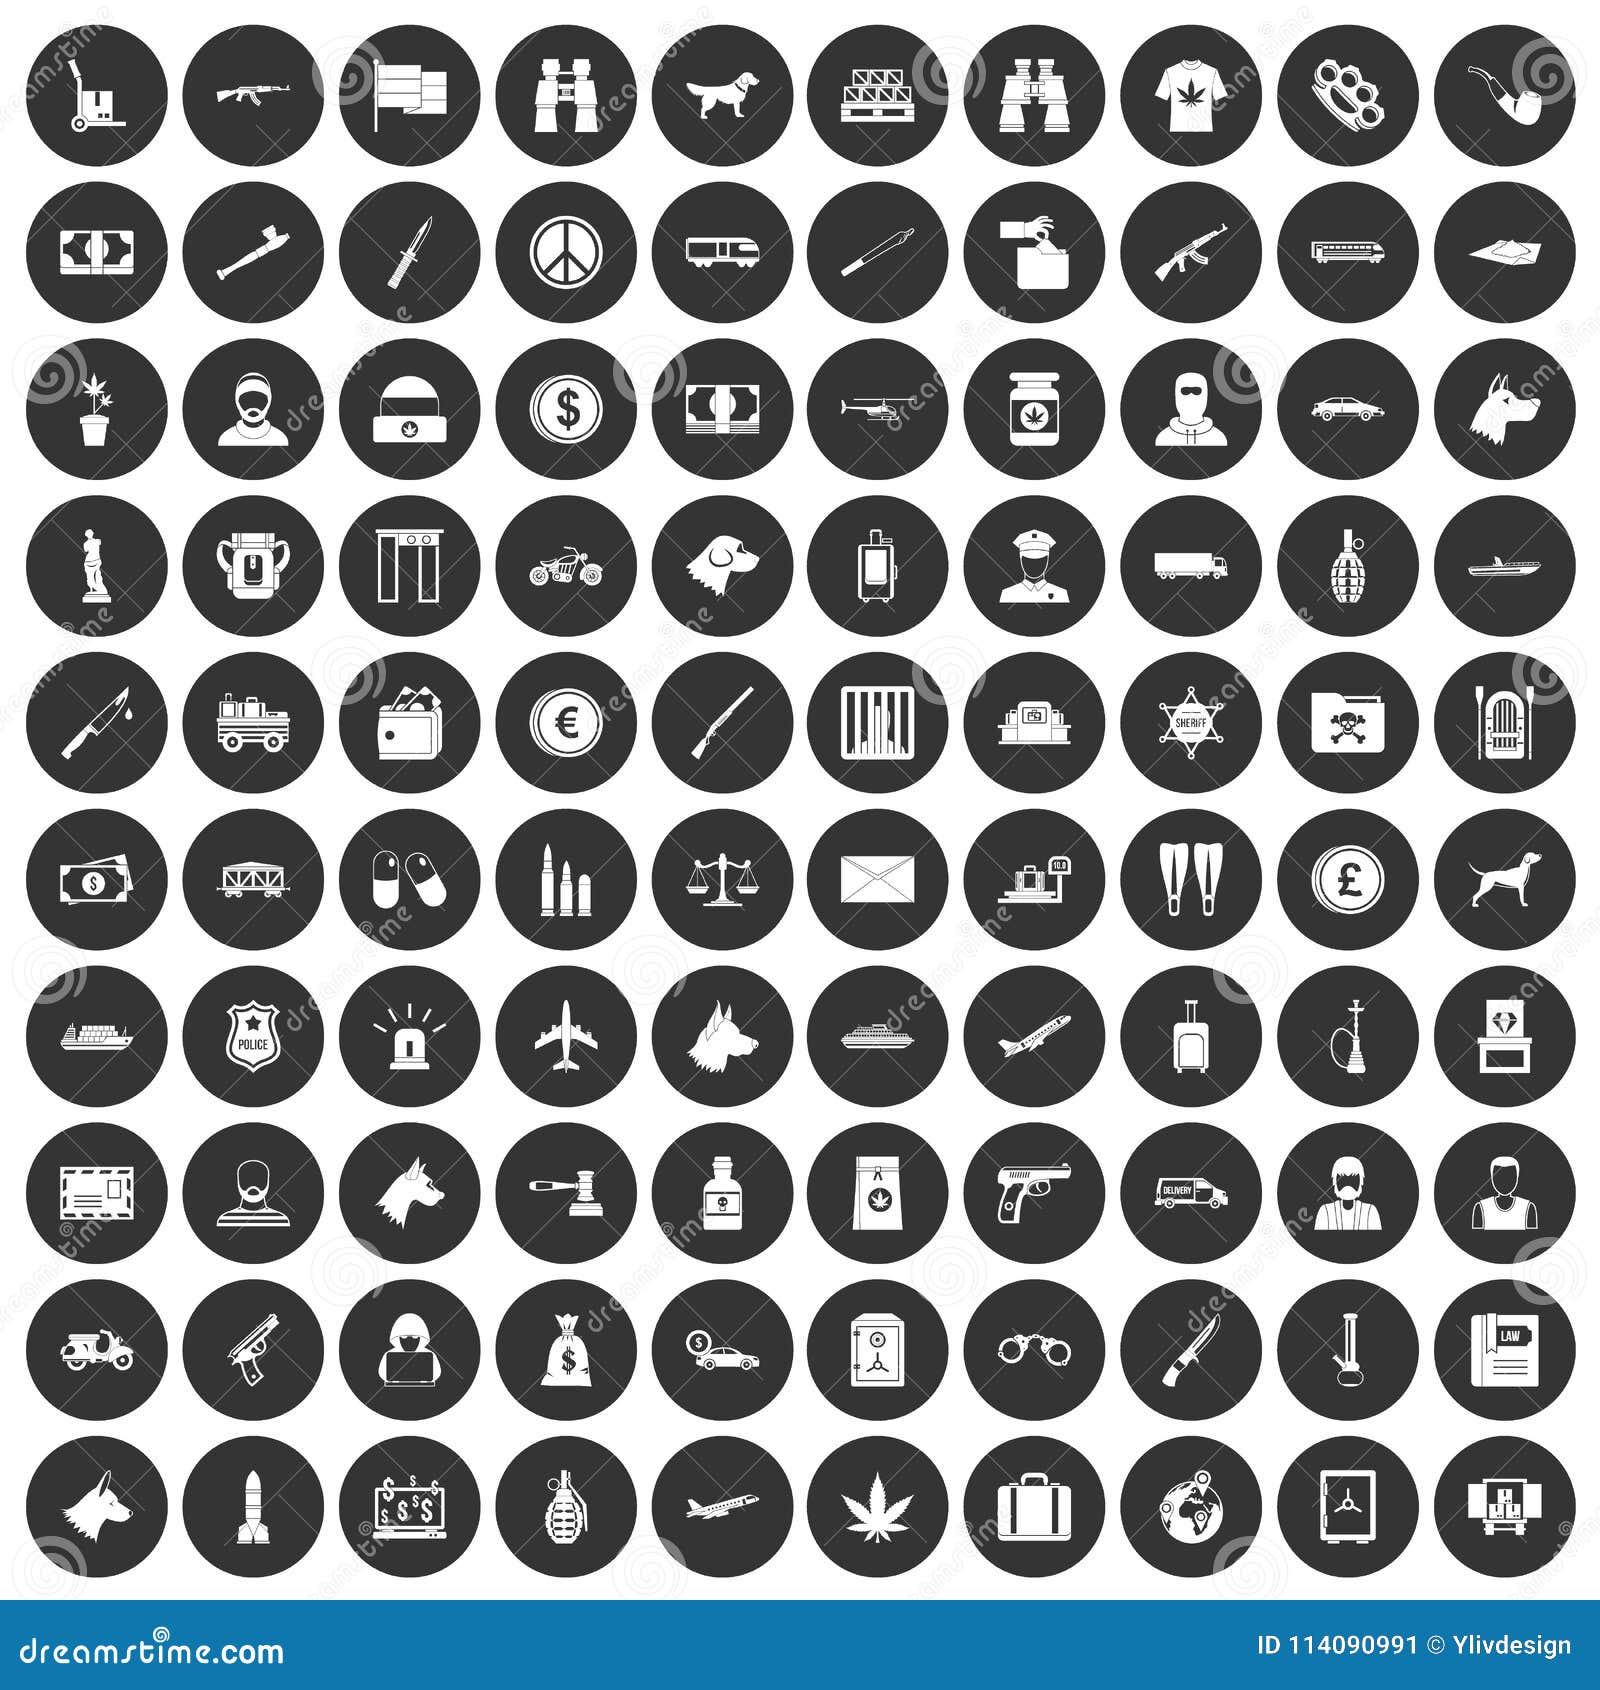 100 smuggling icons set black circle